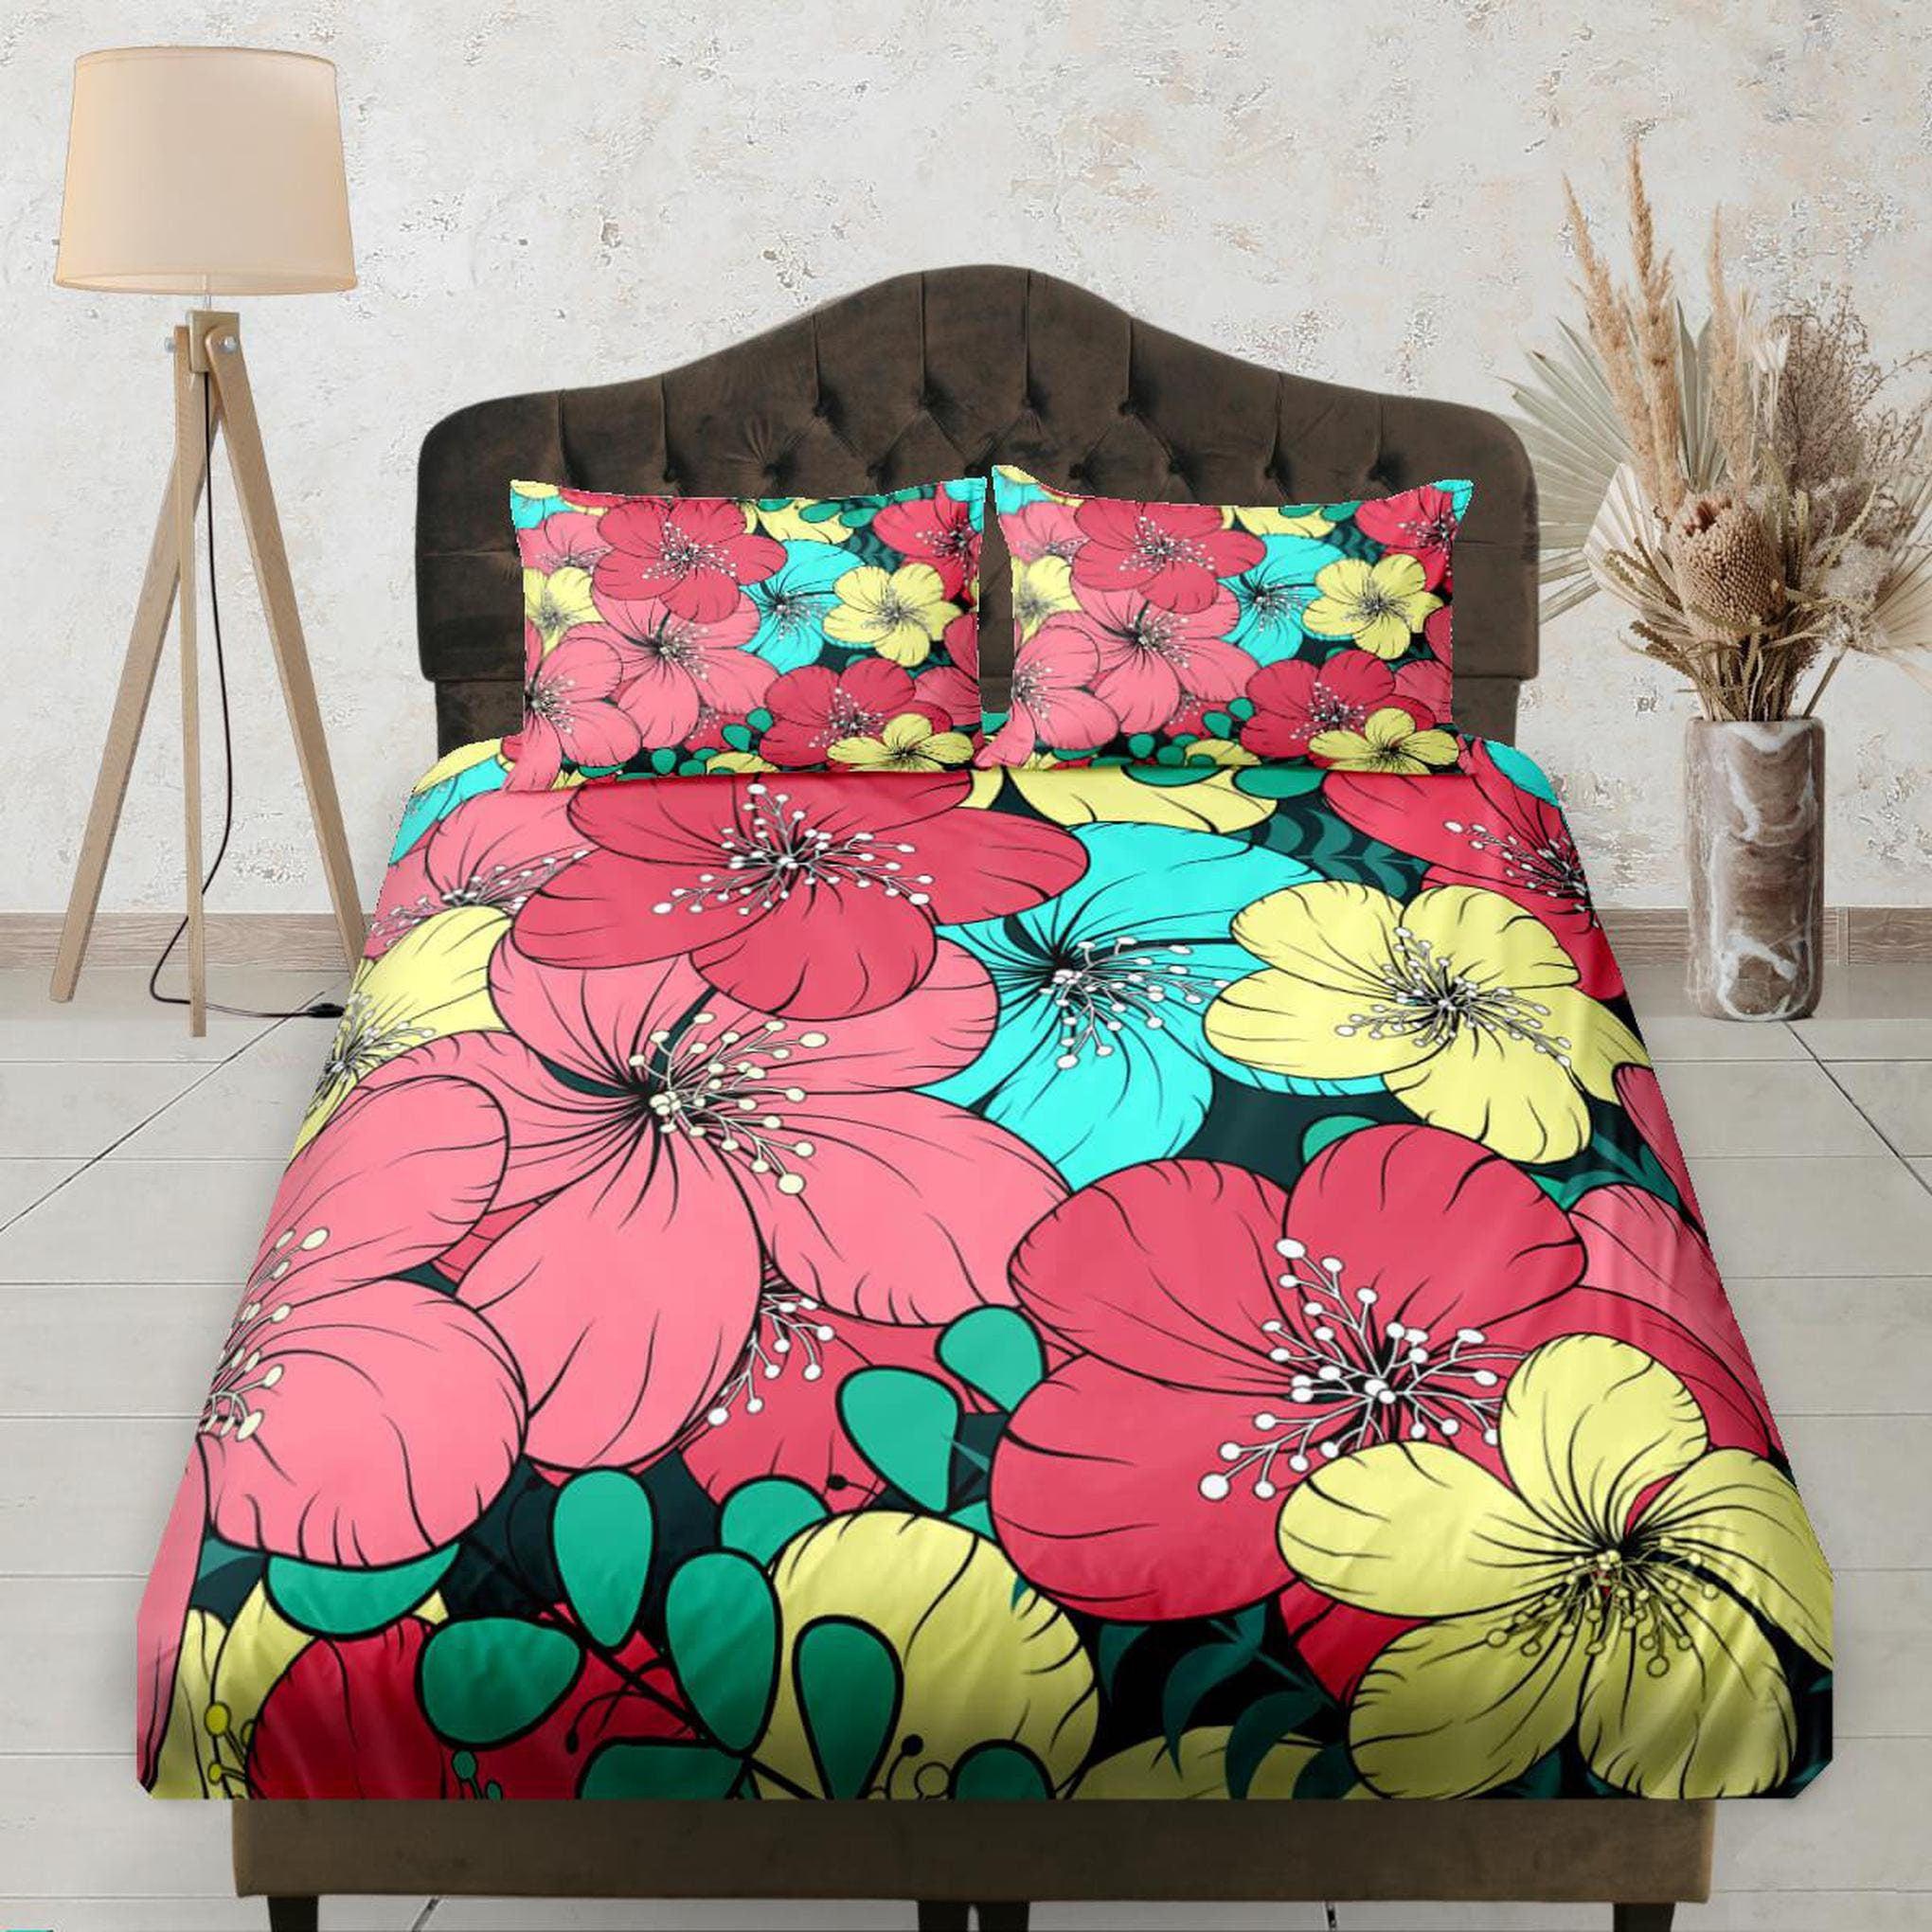 daintyduvet Colorful Hibiscus Bedding, Fitted Bedsheet, Deep Pocket, Floral Prints, Aesthetic Boho Bedding Set, Dorm Bedding, Crib Sheet, King, Queen